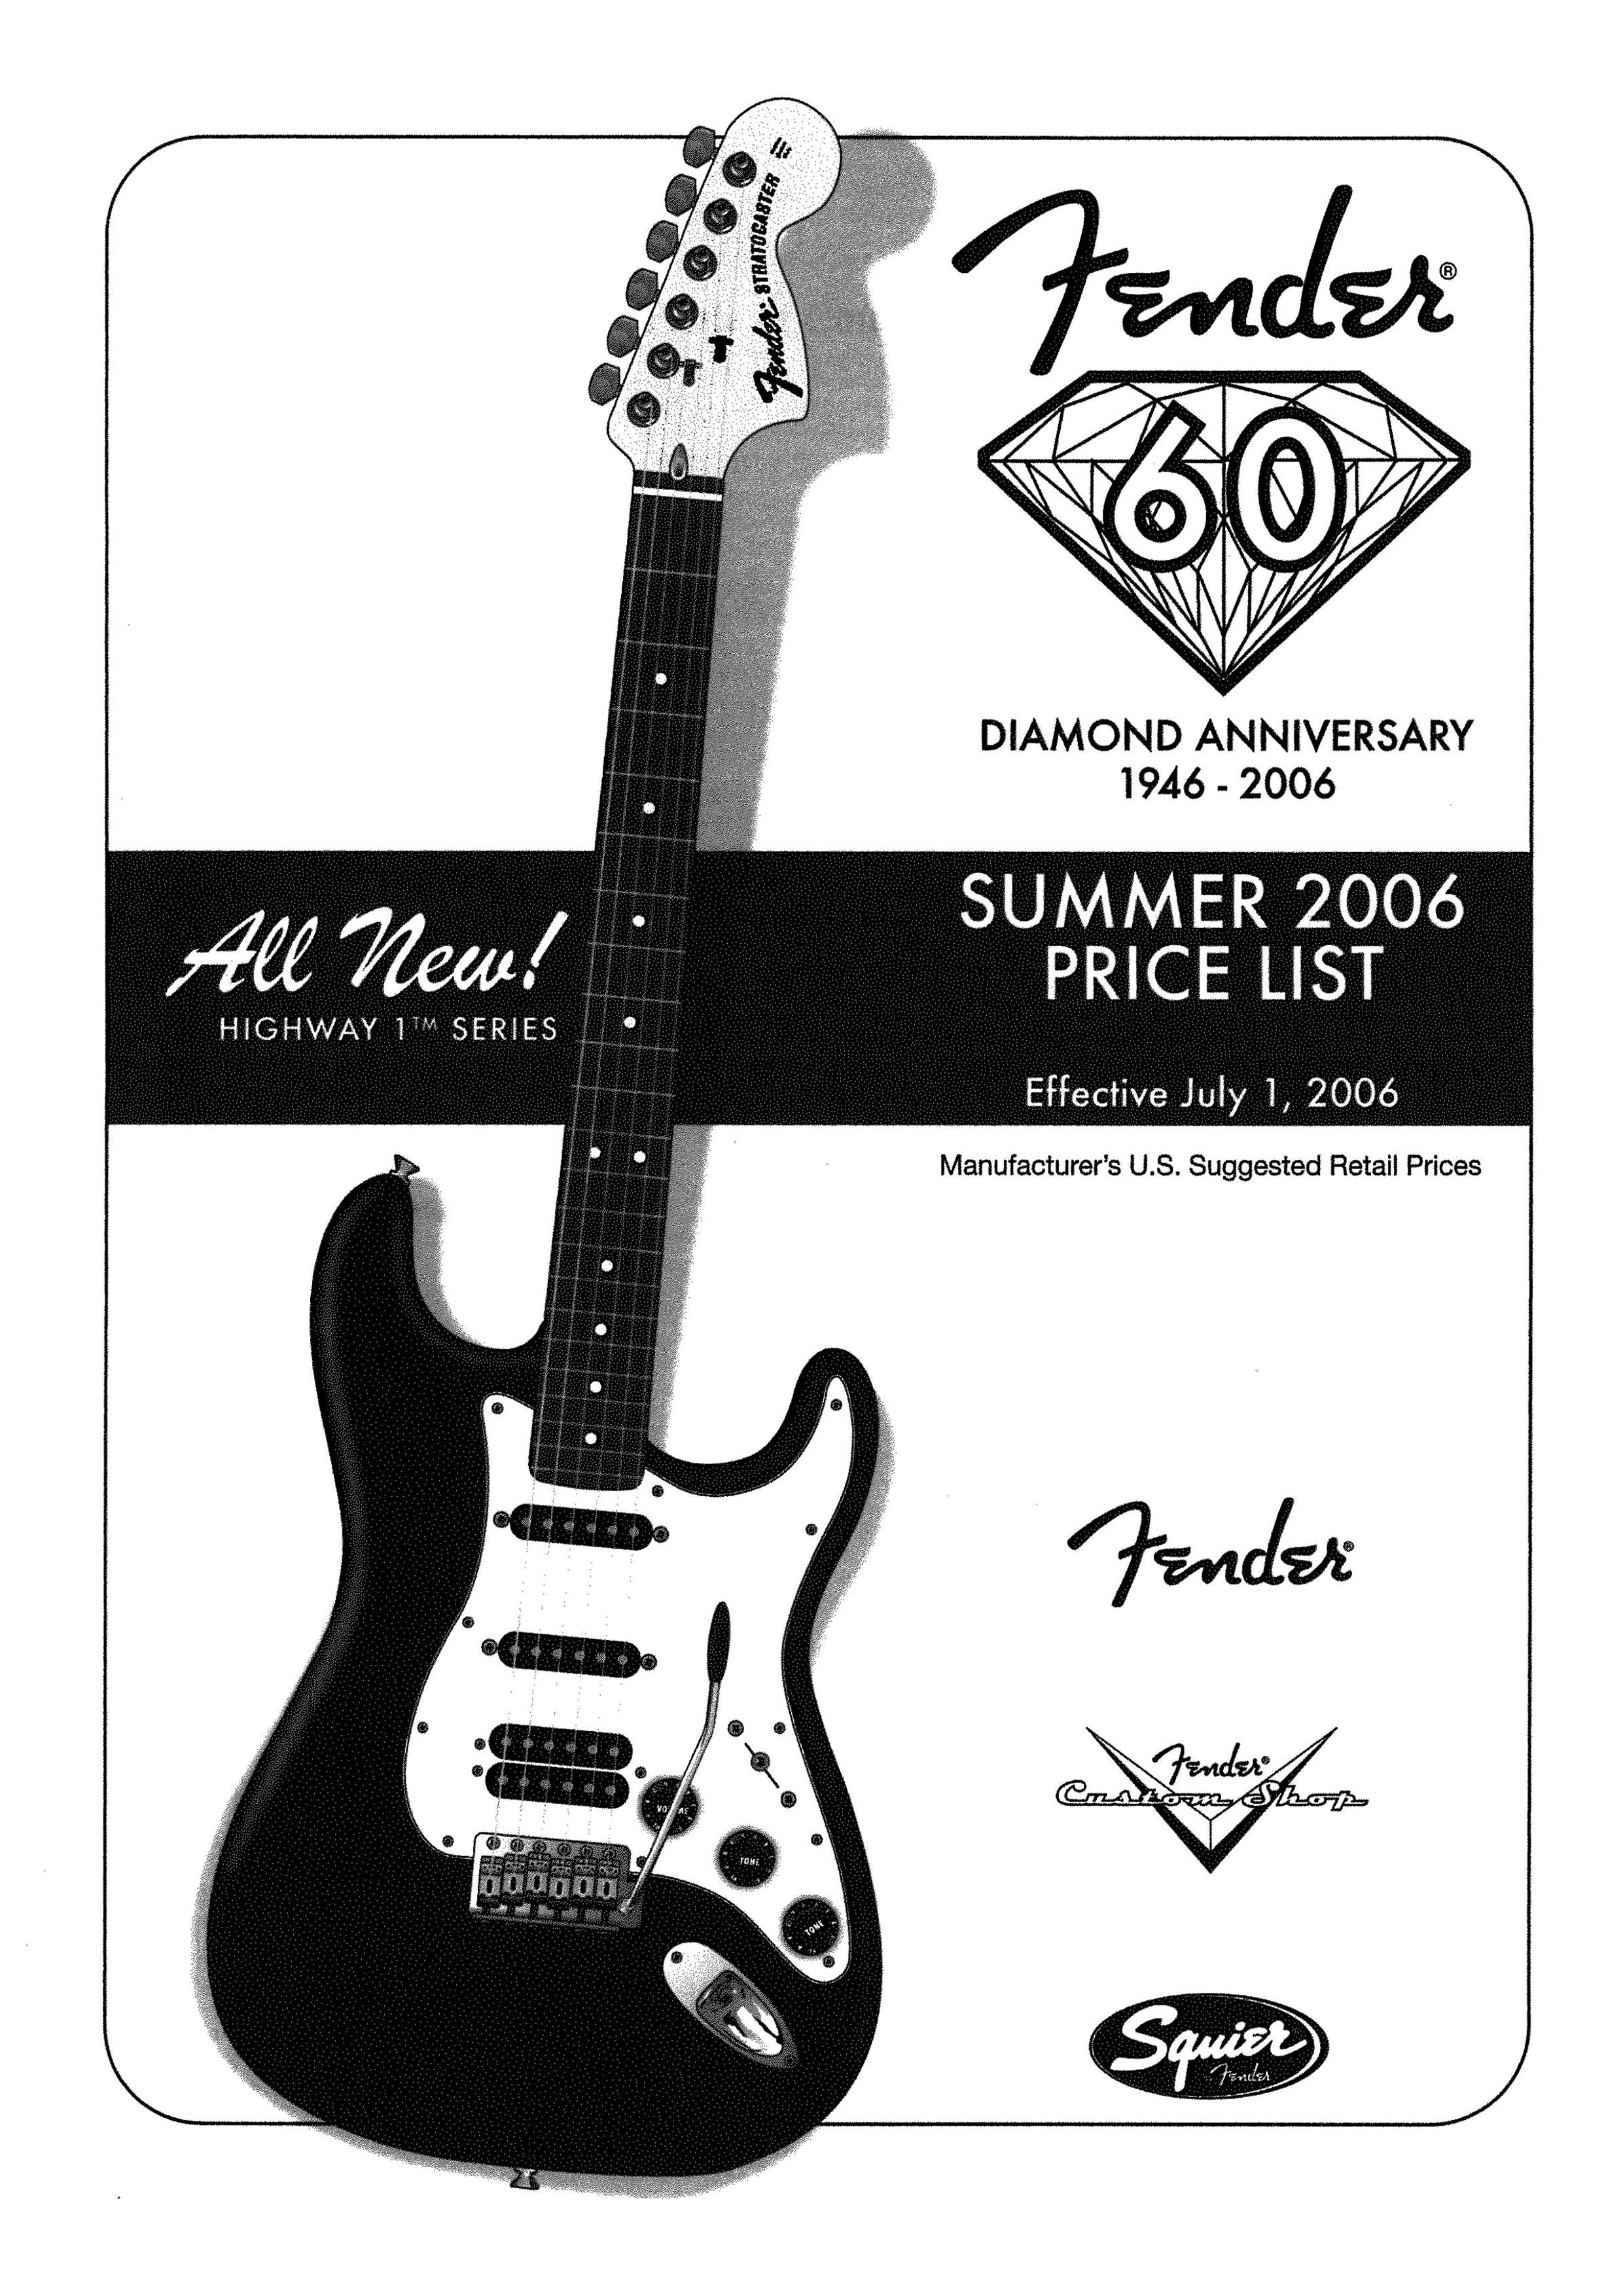 Fender Price list 2006